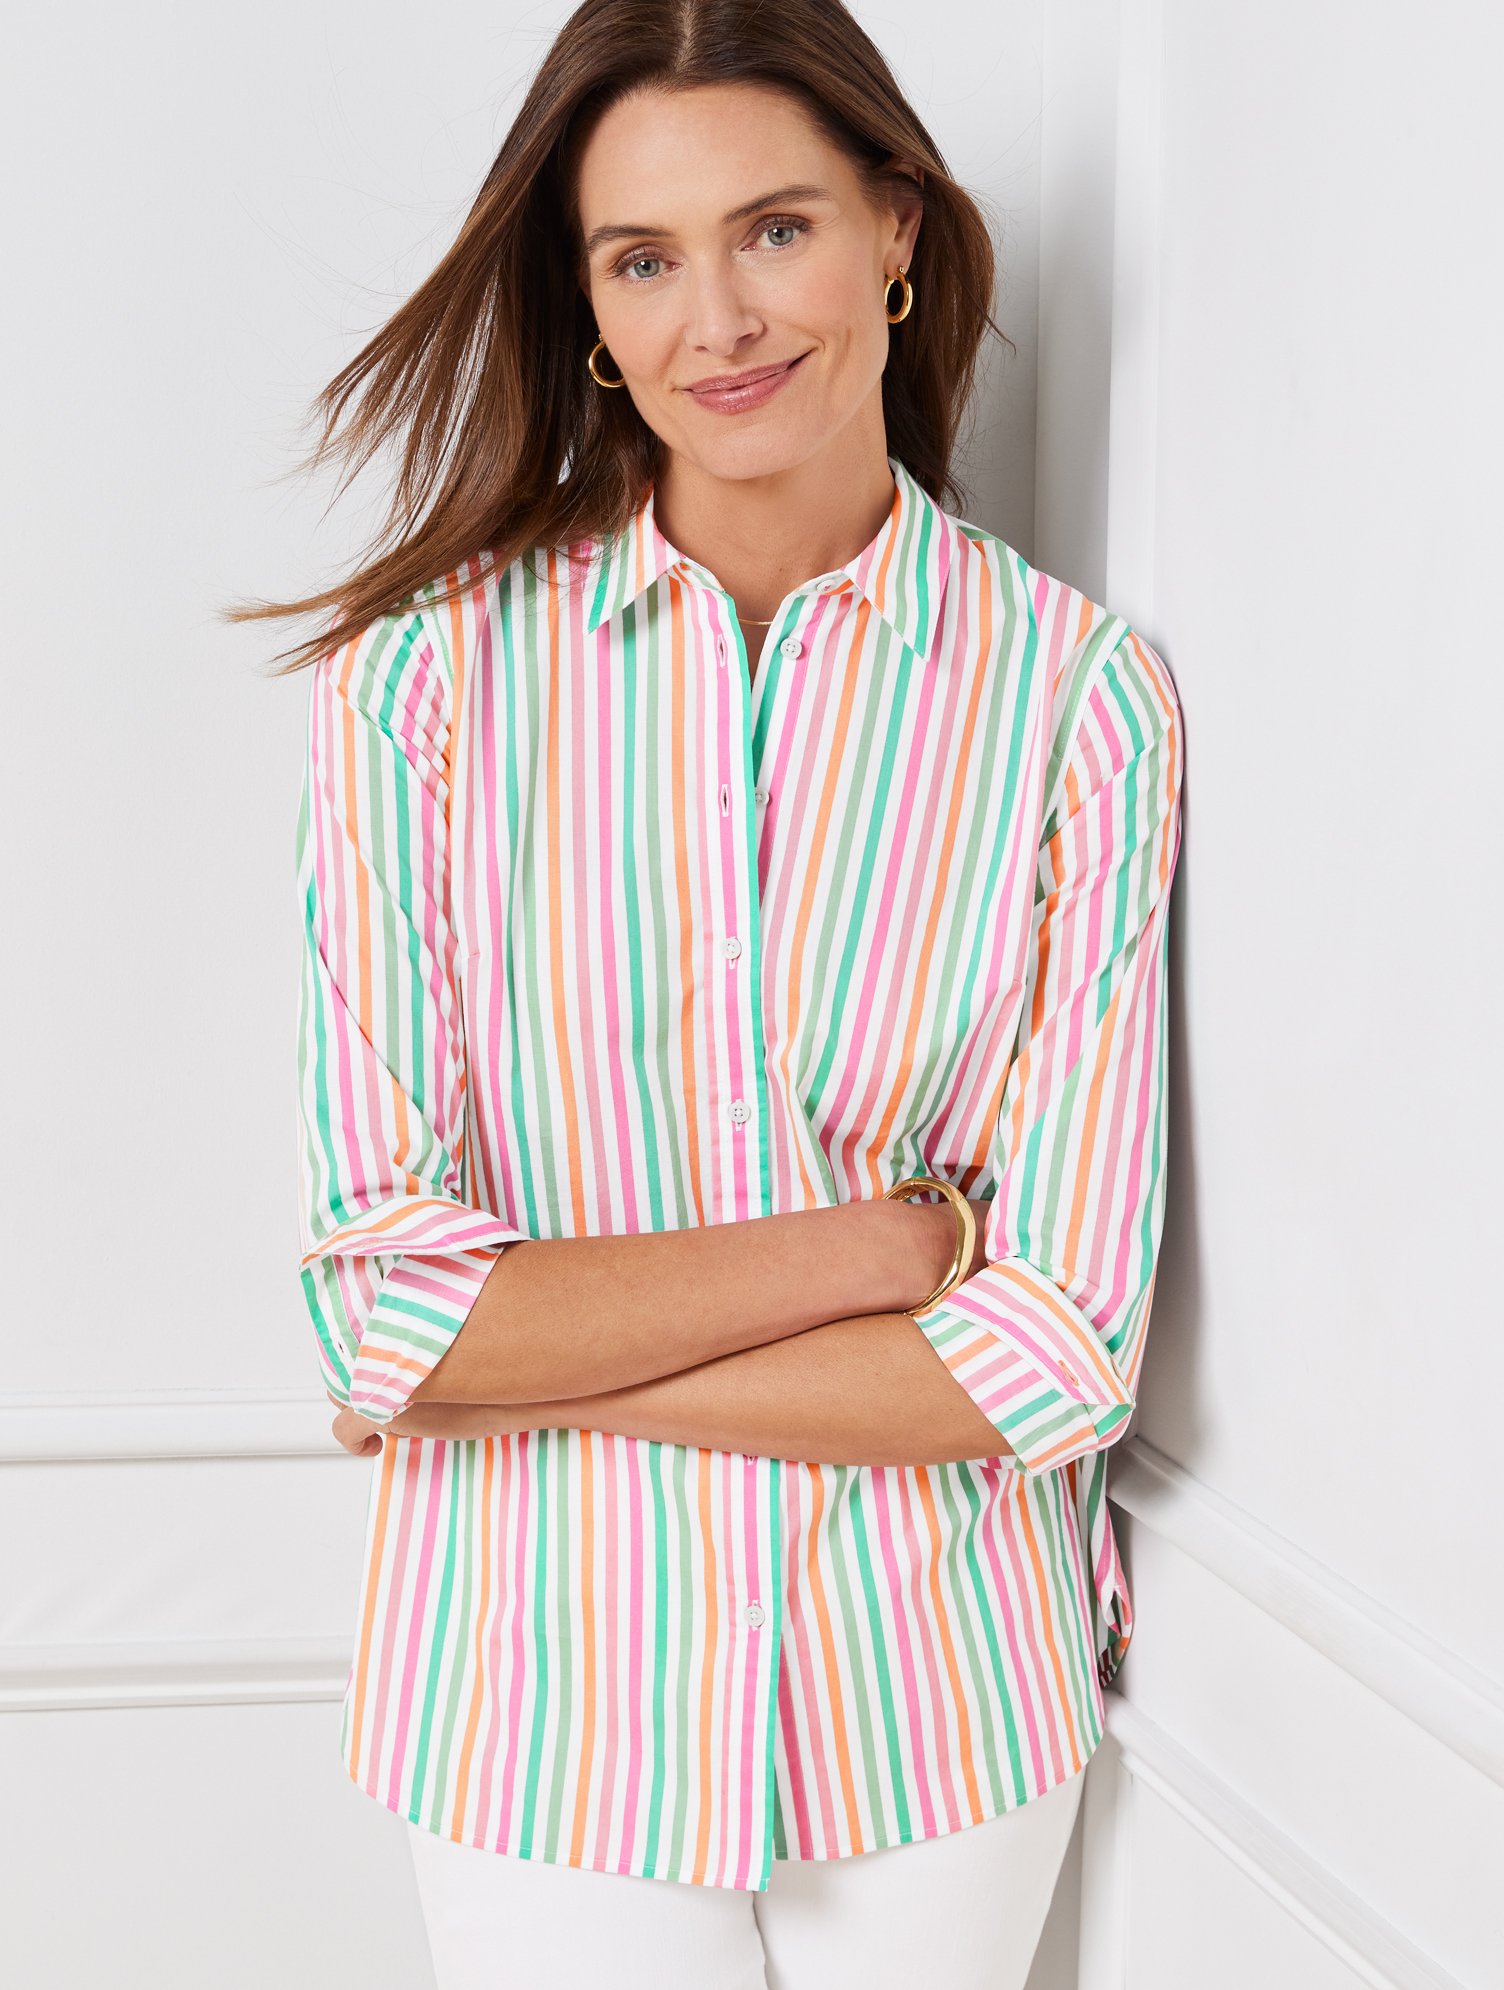 Talbots Cotton Button Front Shirt - Spring Fling Stripe - White/pink - 3x  In White,pink